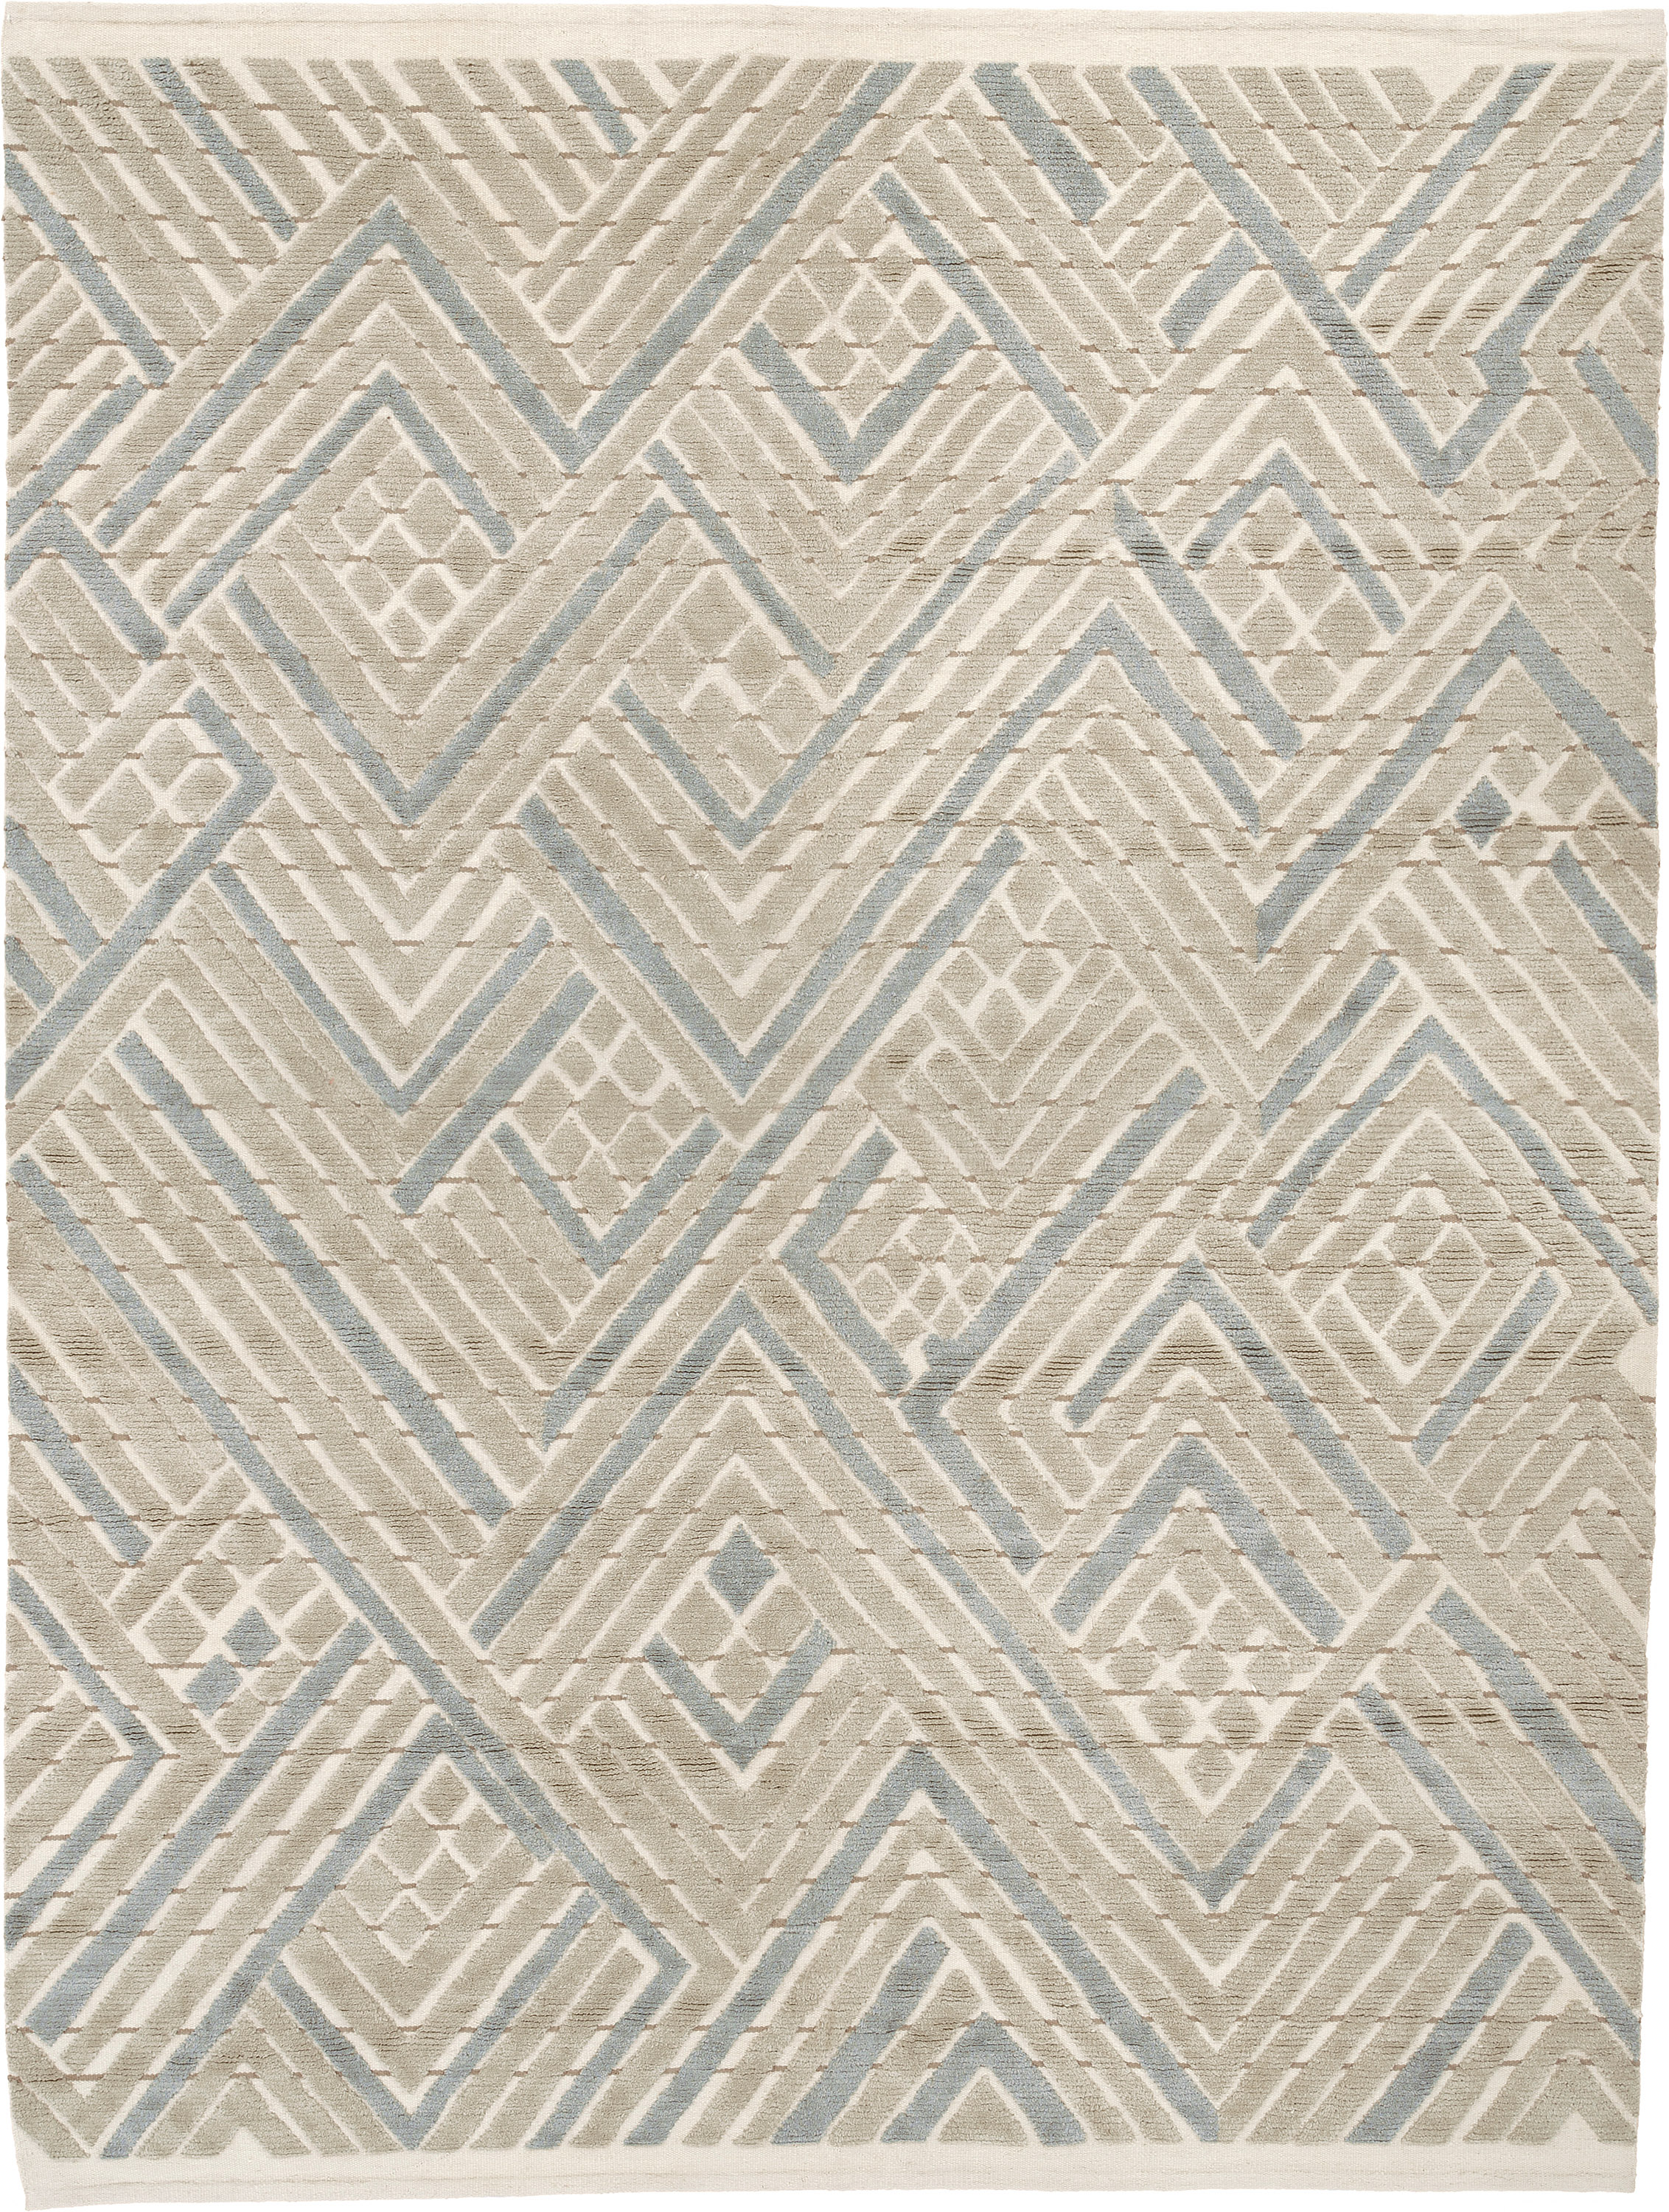 16863 Romb Design | Custom Swedish Inspired Carpet | FJ Hakimian | Carpet Gallery in NY